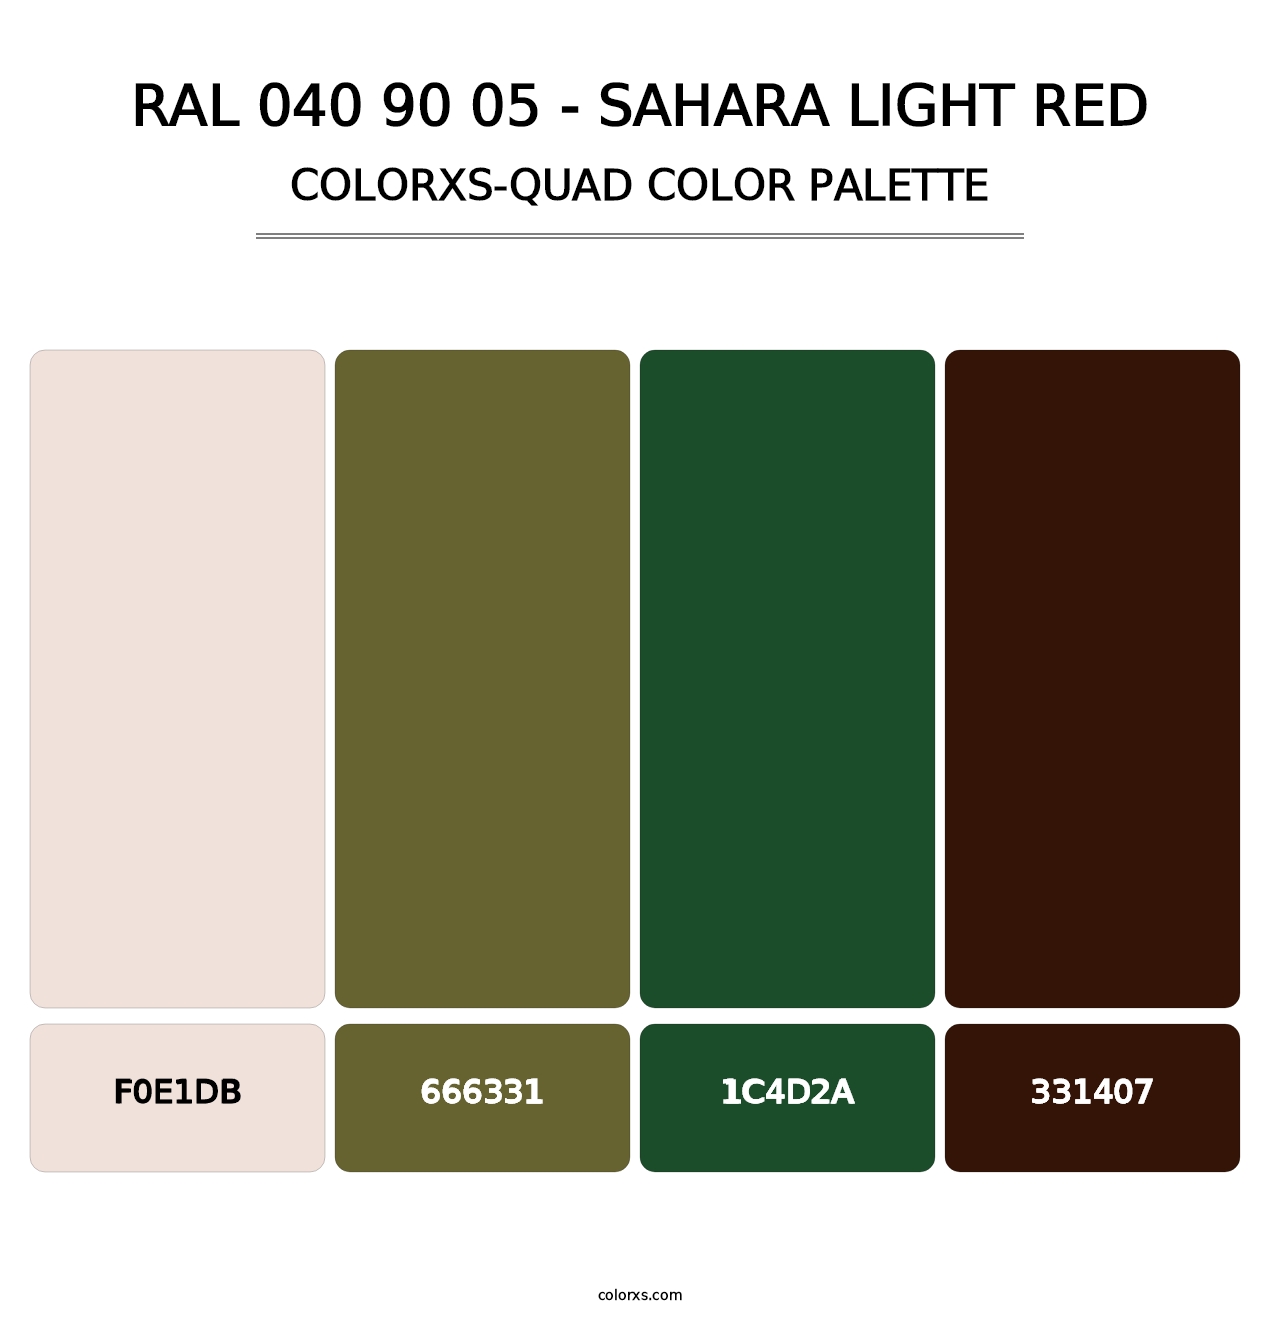 RAL 040 90 05 - Sahara Light Red - Colorxs Quad Palette